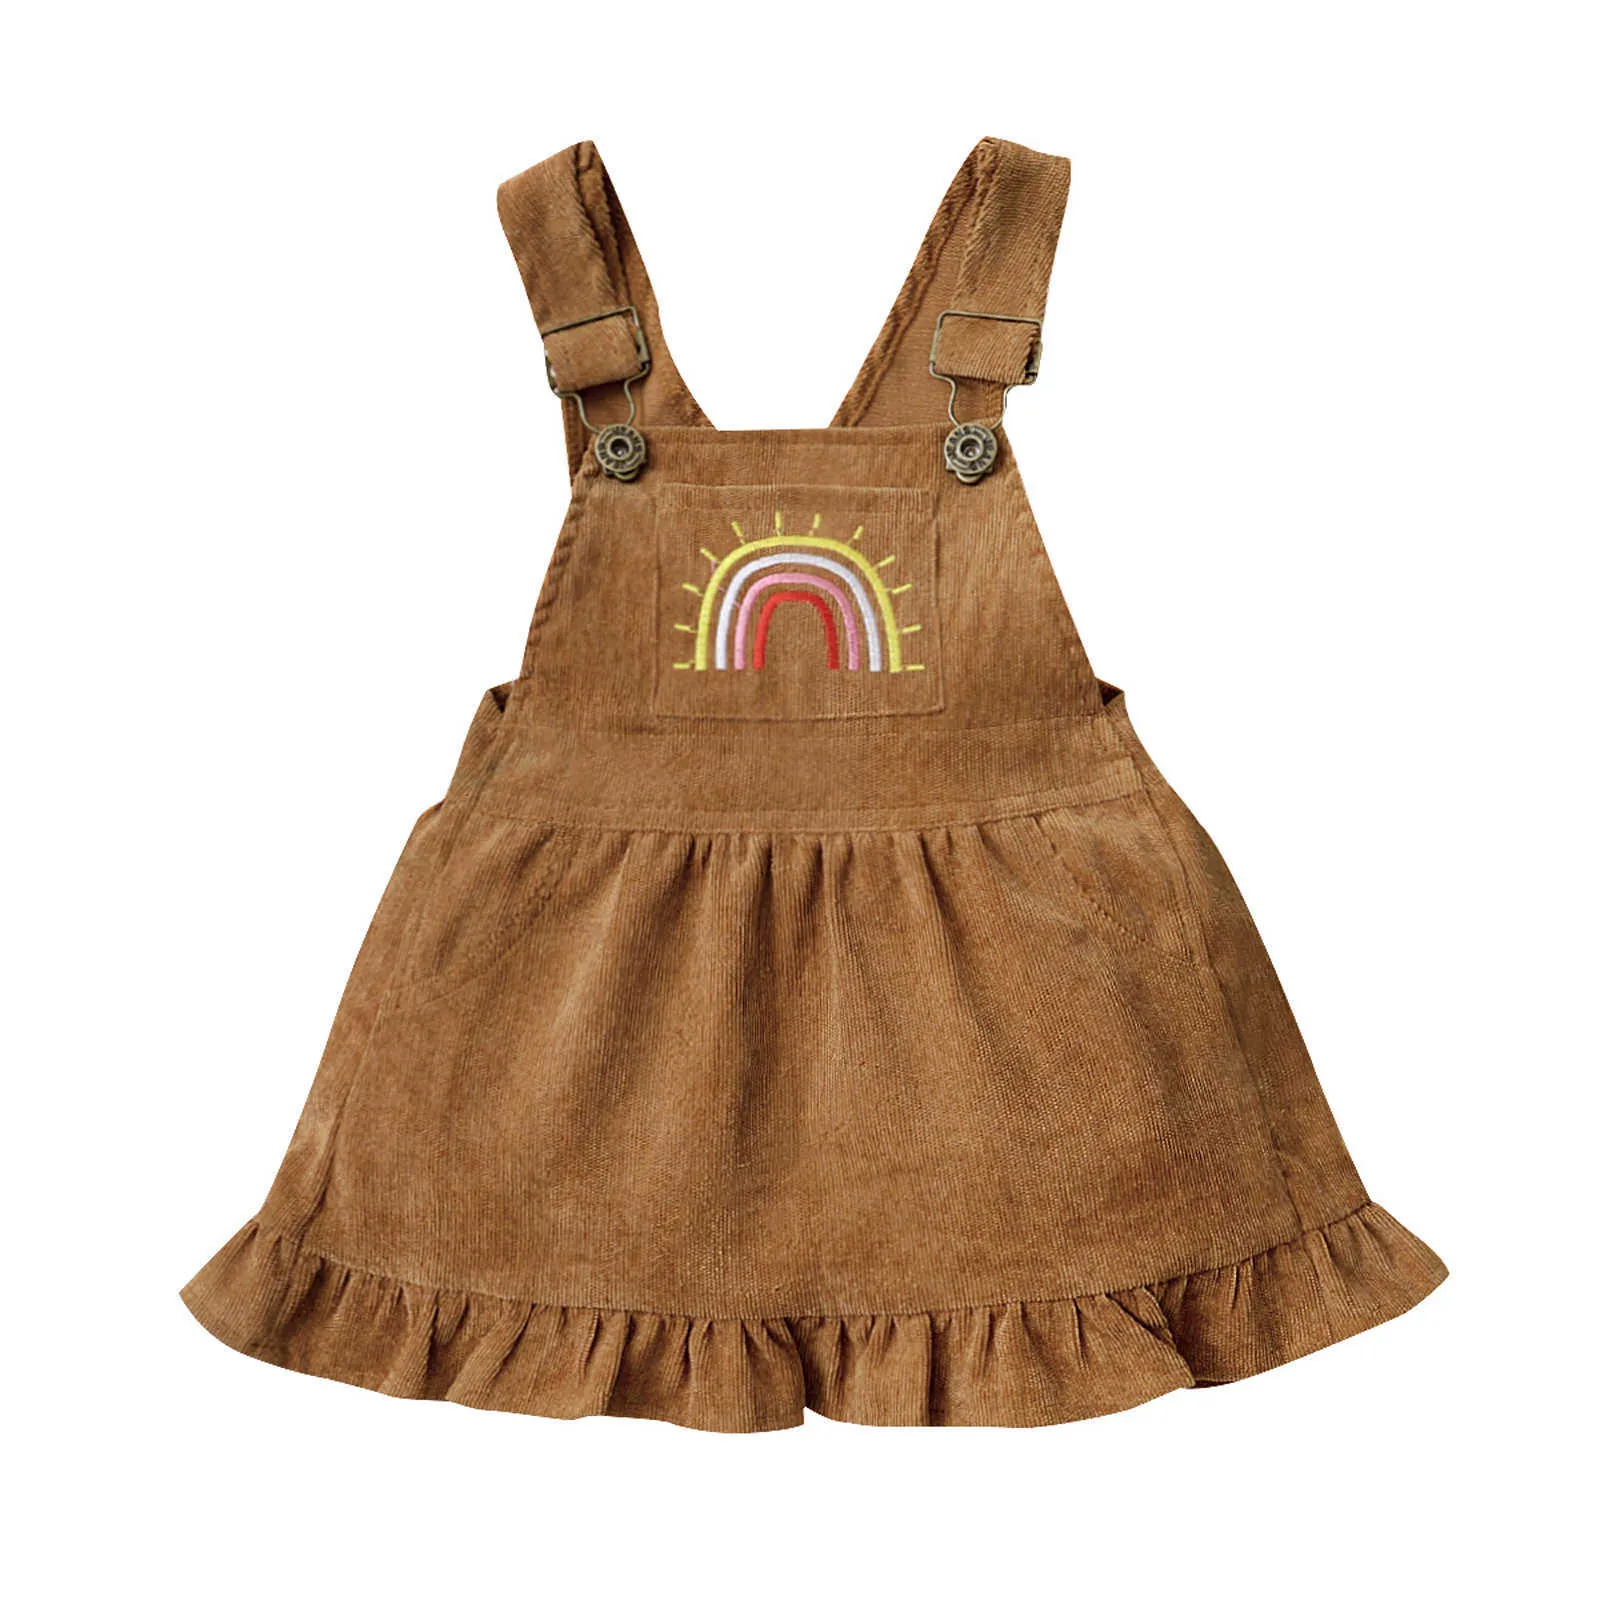 Toddler Girls Clothes Dress Corduroy Round Collar Sleeveless Rainbow Printing Dress Cute Kids Girl Clothing Sundress Q0716